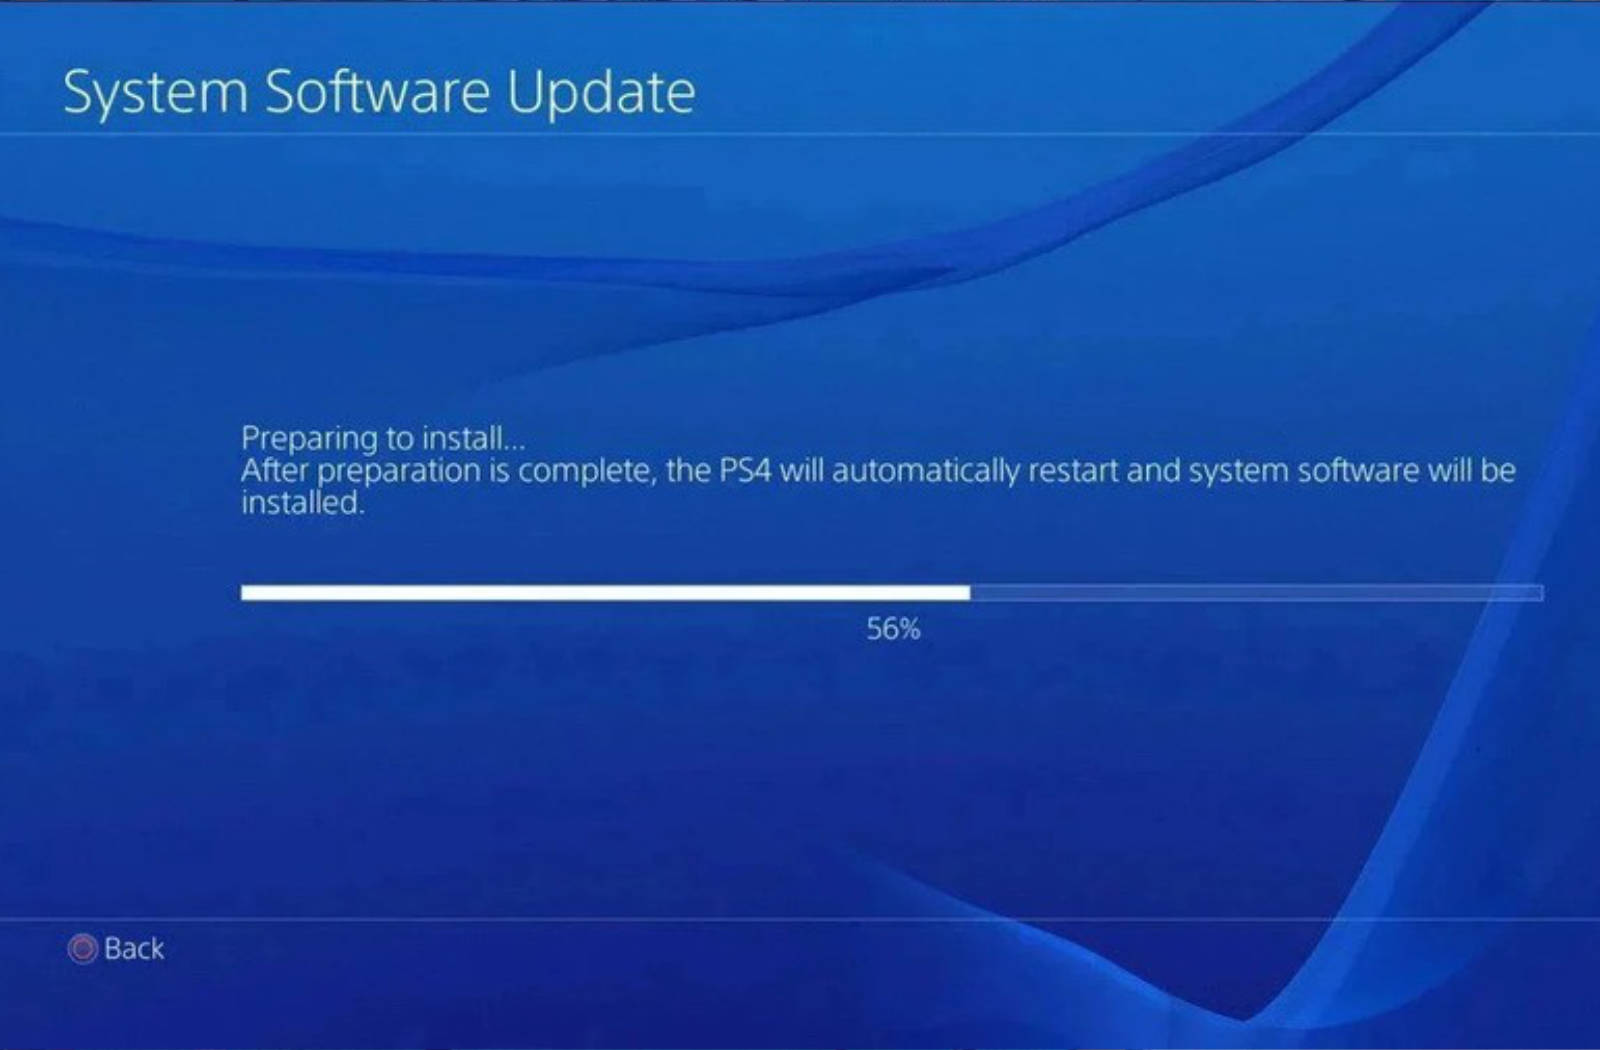 PS4 Firmware updates